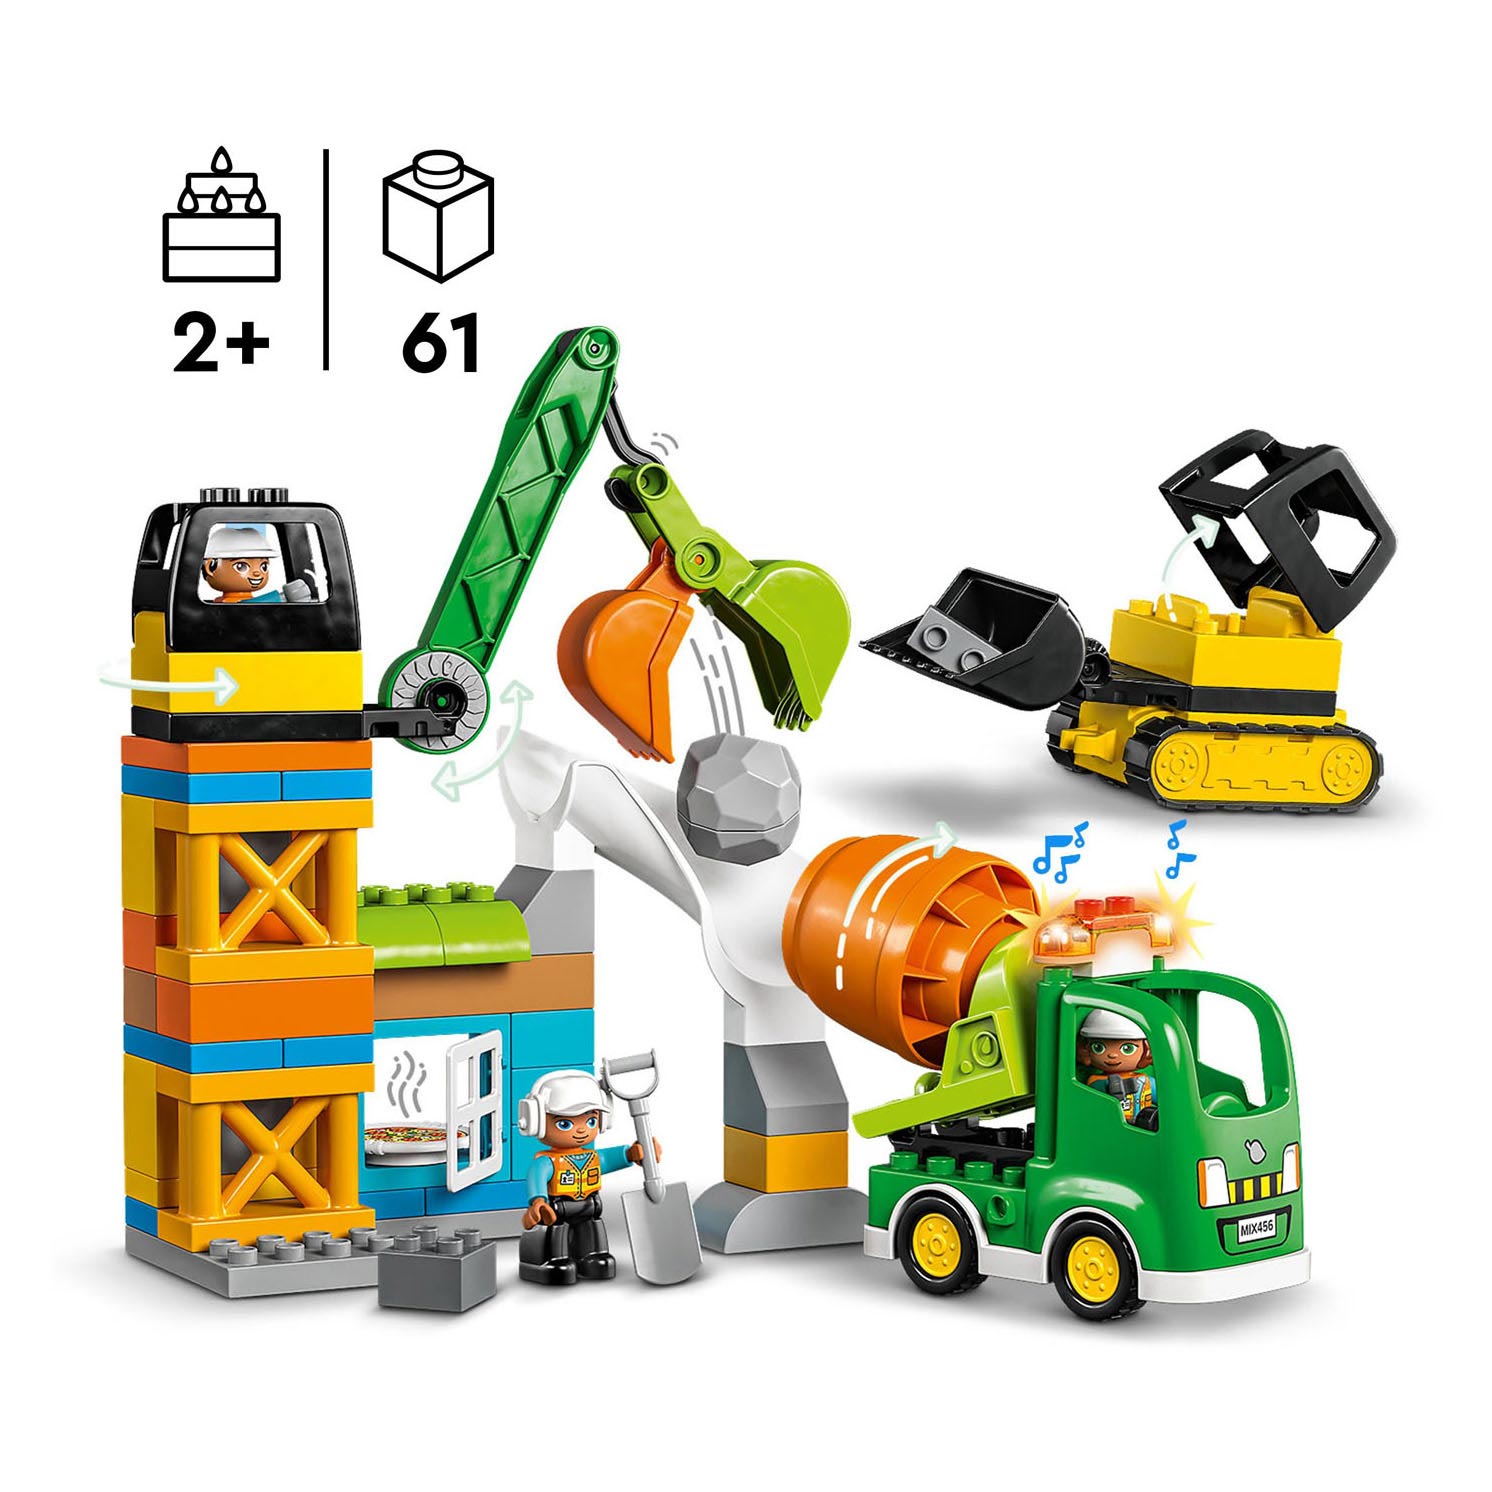 LEGO Duplo 10990 Le chantier de construction